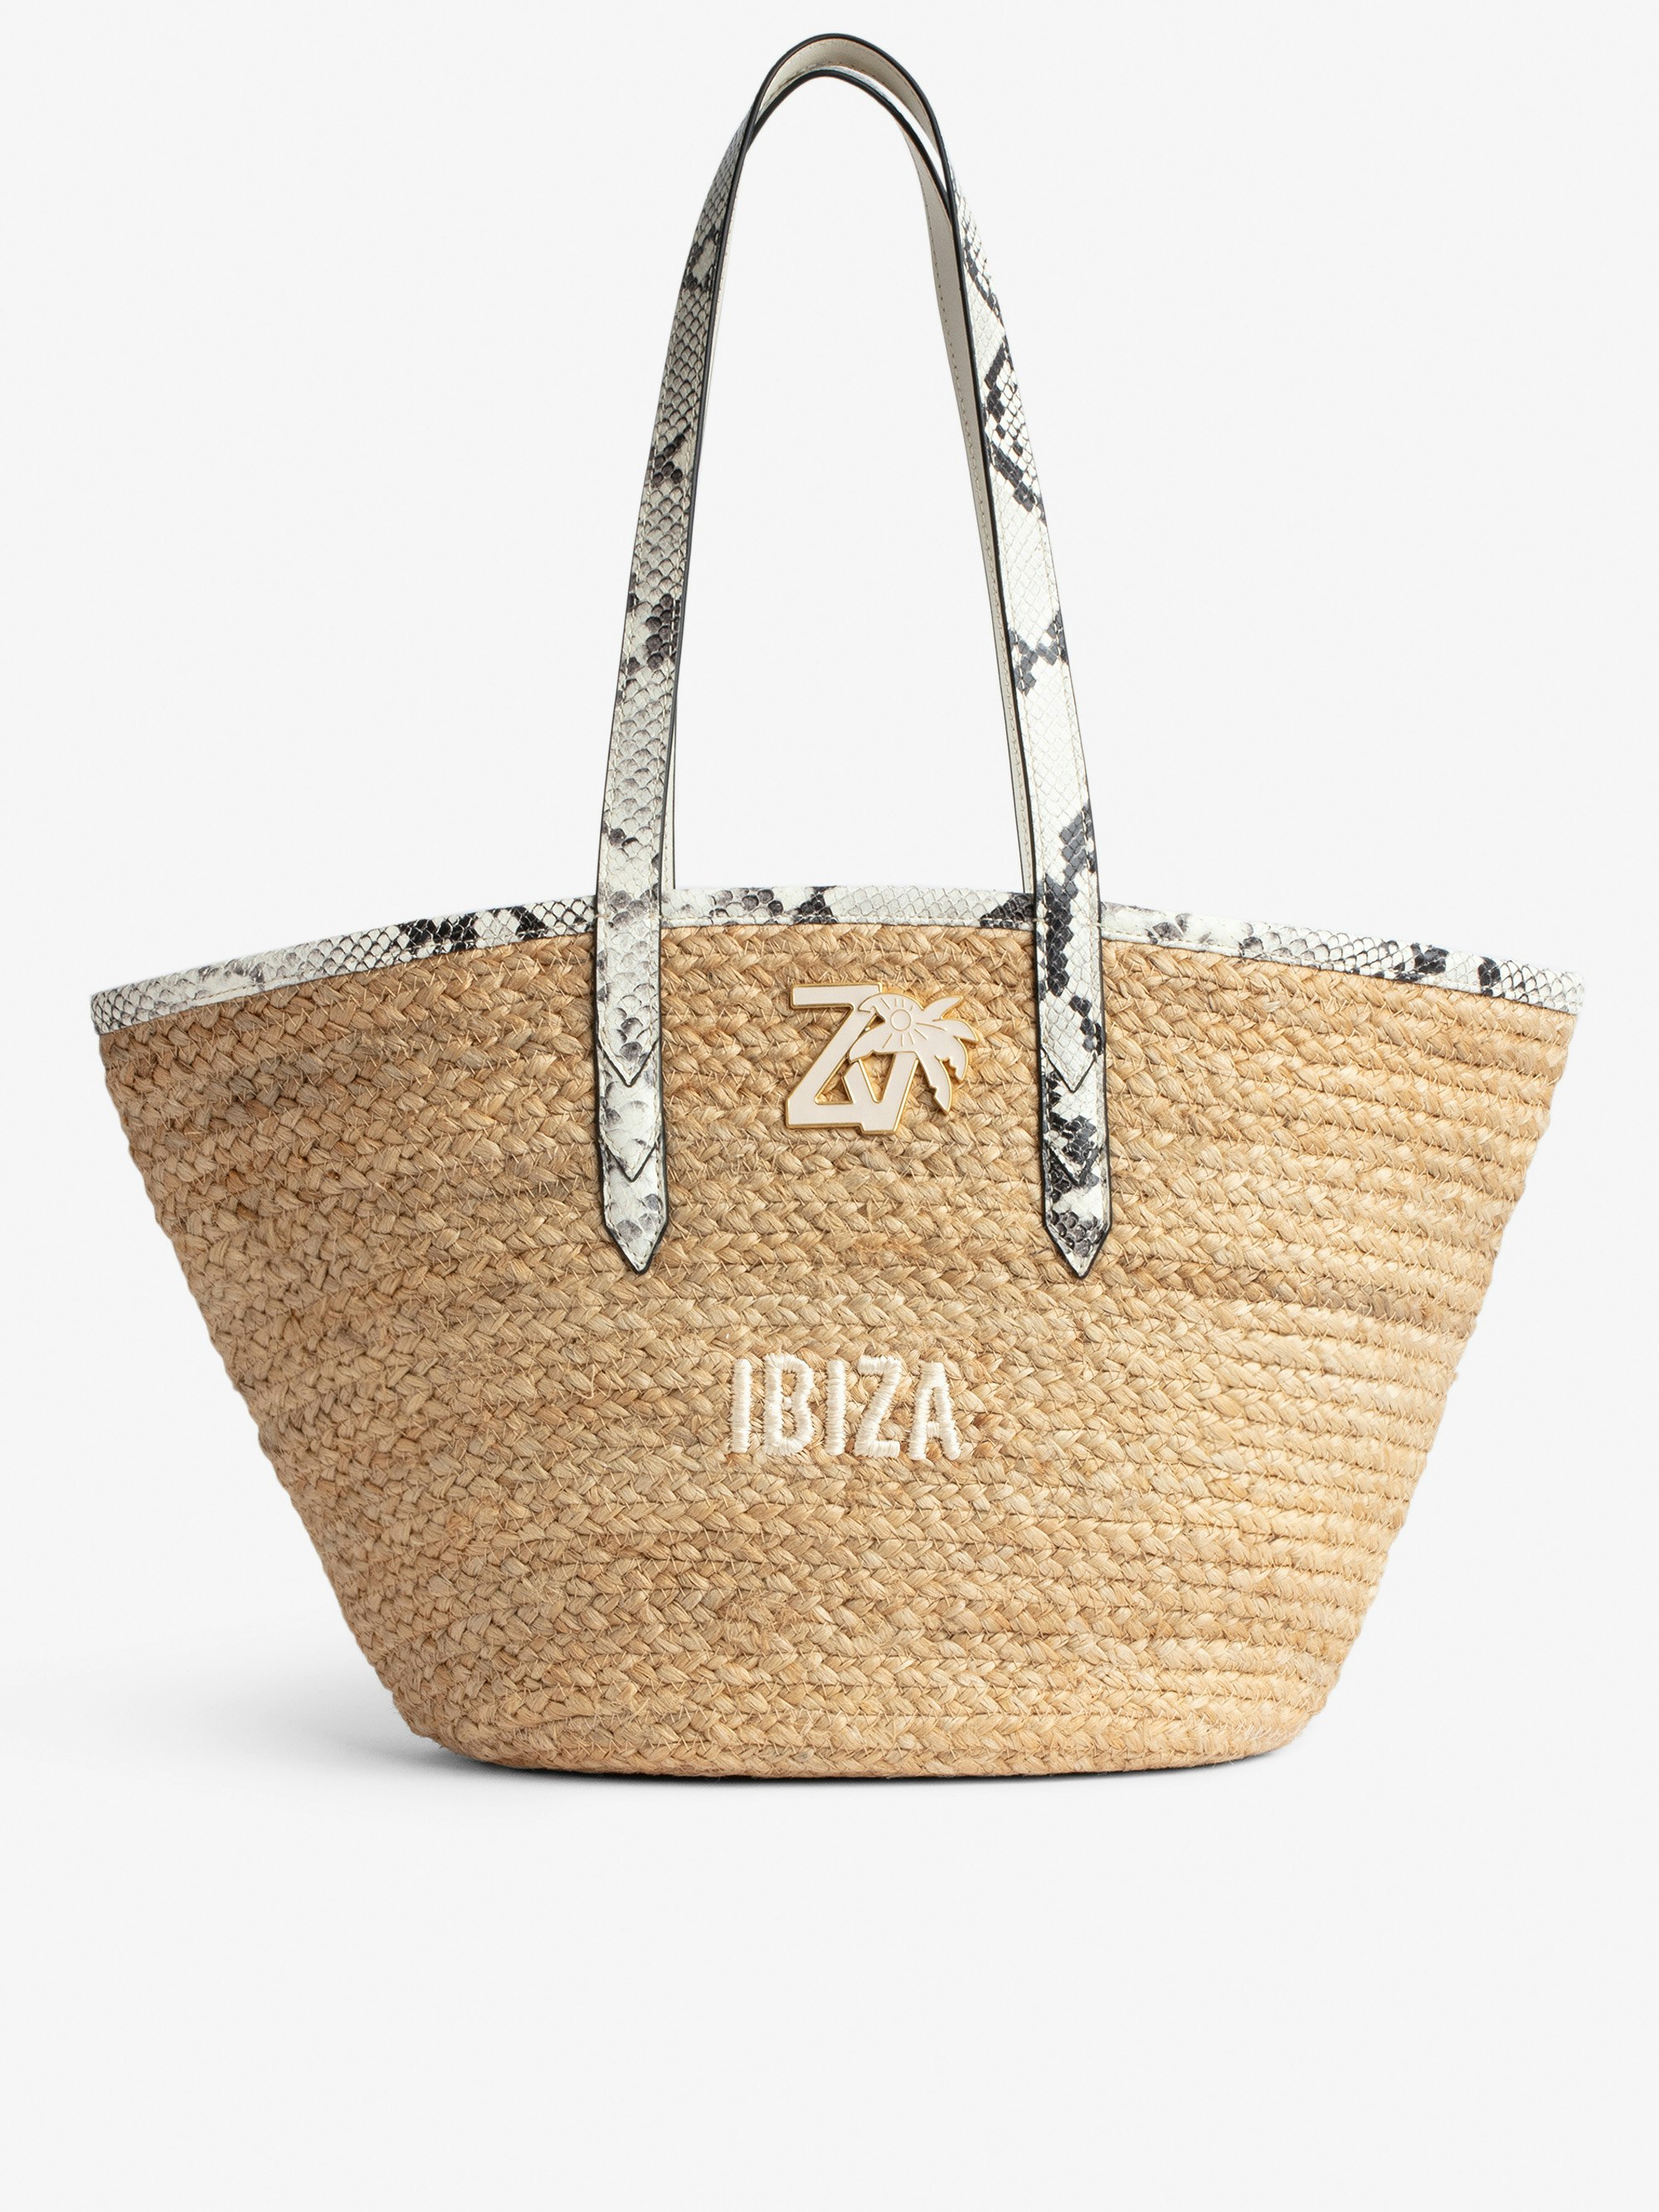 Bolso Le Beach Bag - Bolso de paja con asas de cuero color crudo efecto pitón, bordado «Ibiza» y con colgante ZV Mujer